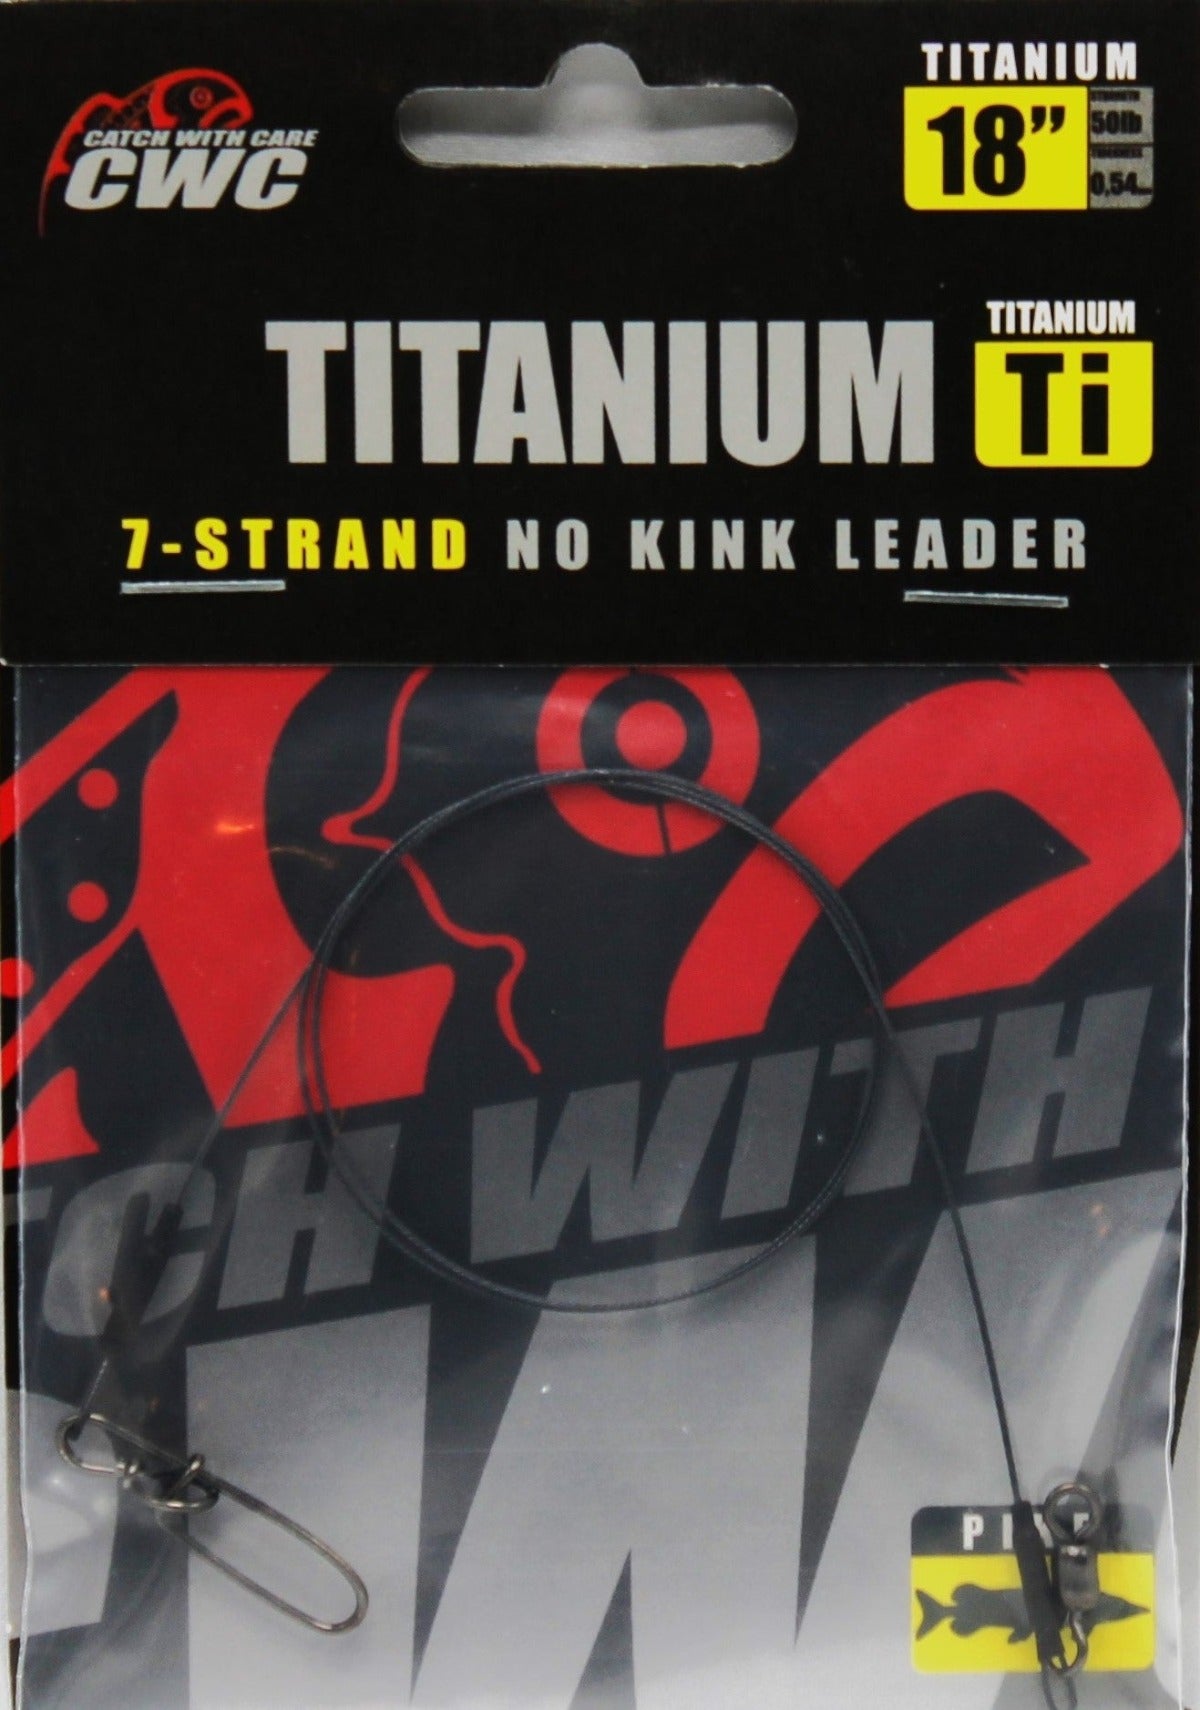 CWC Titanium Wire Leader, 7 brins 18'' 50lb - Stay lok